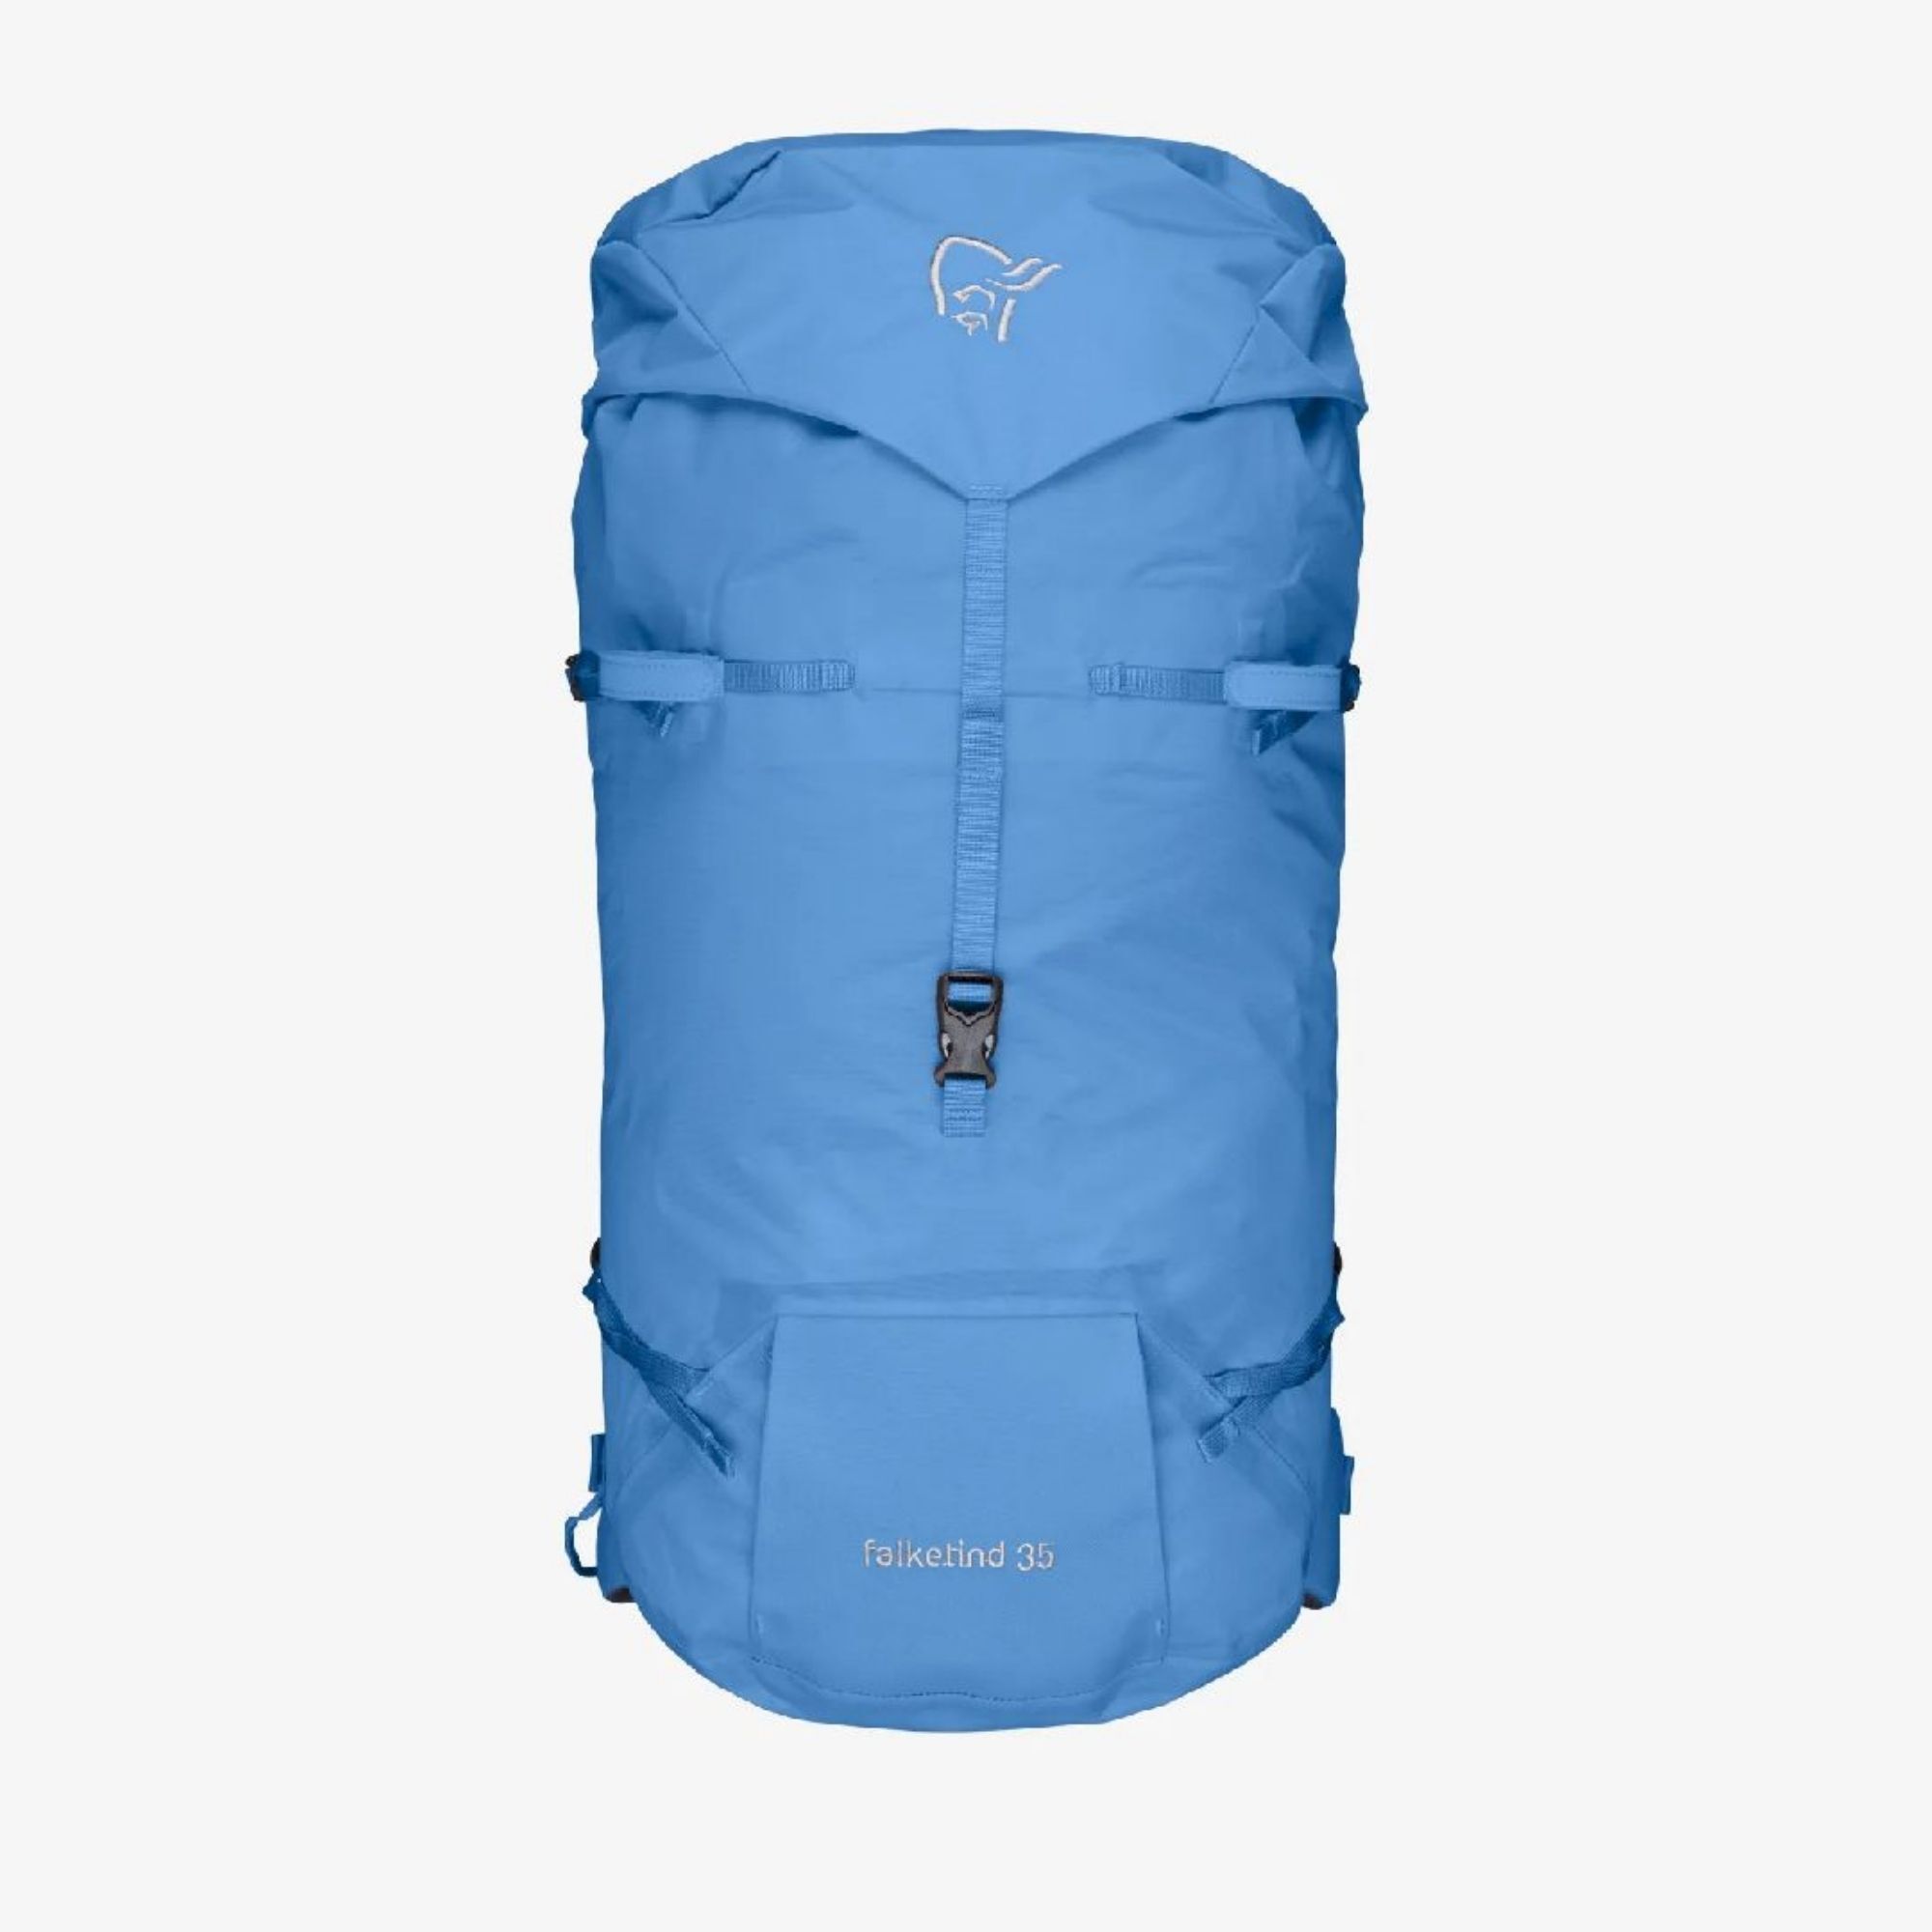 Nørrona Falketind 35L Pack - Hiking backpack